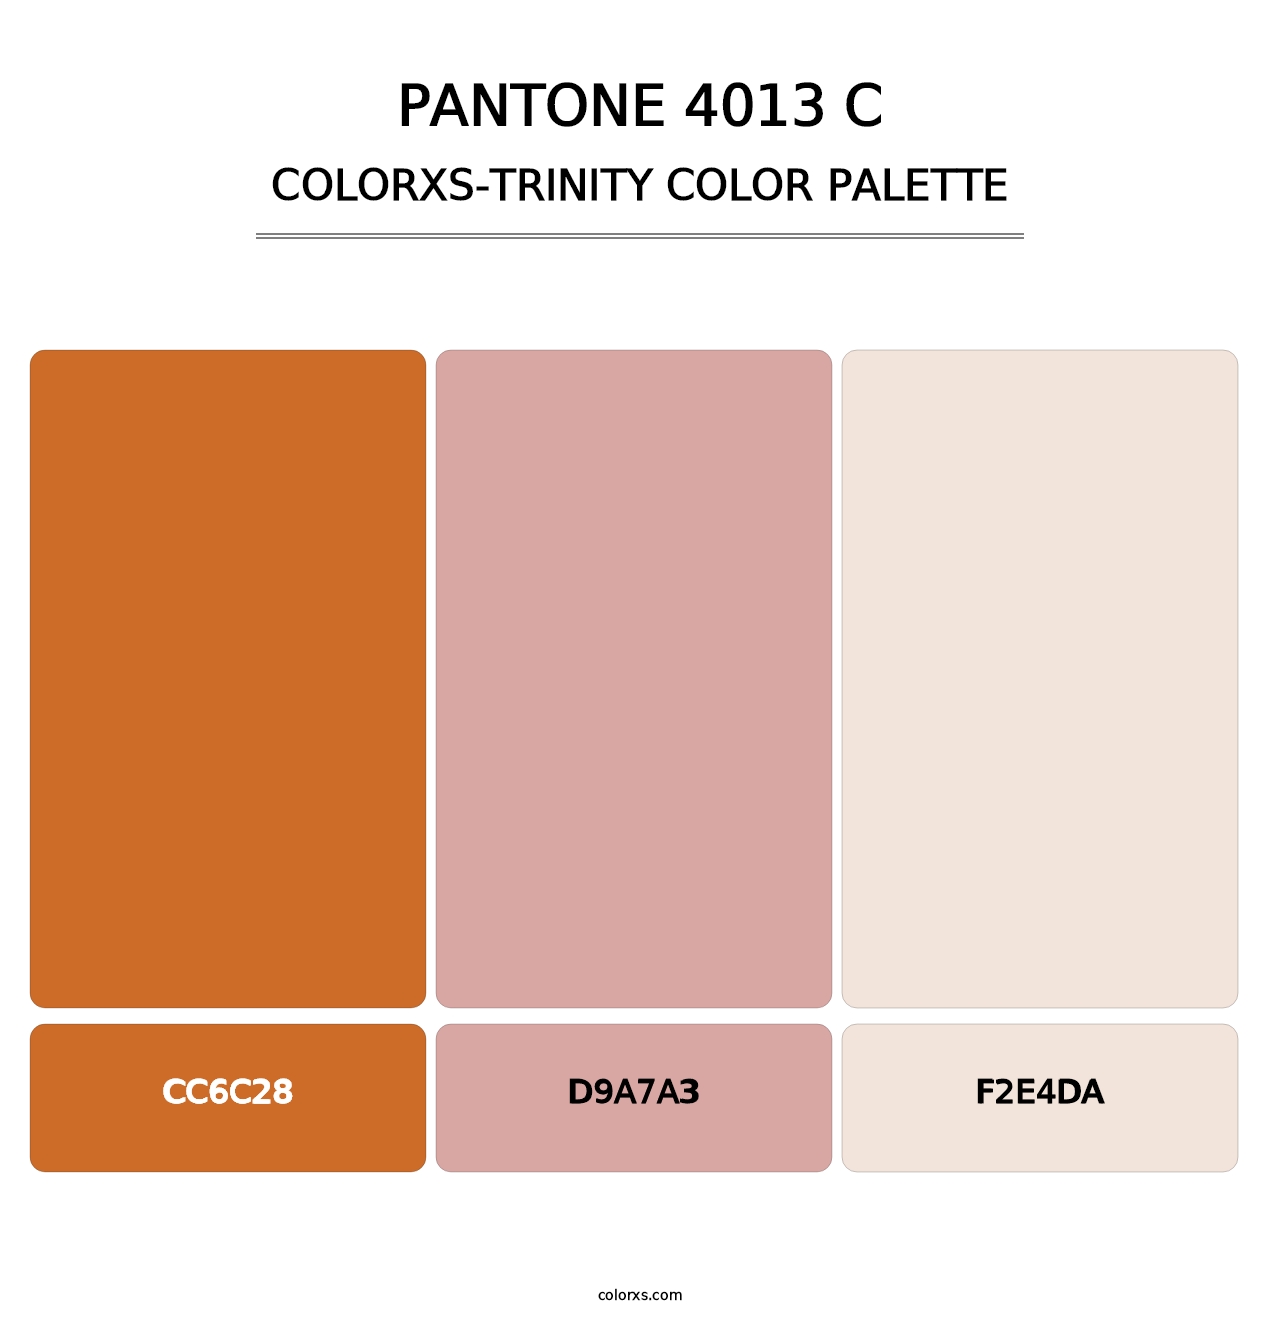 PANTONE 4013 C - Colorxs Trinity Palette